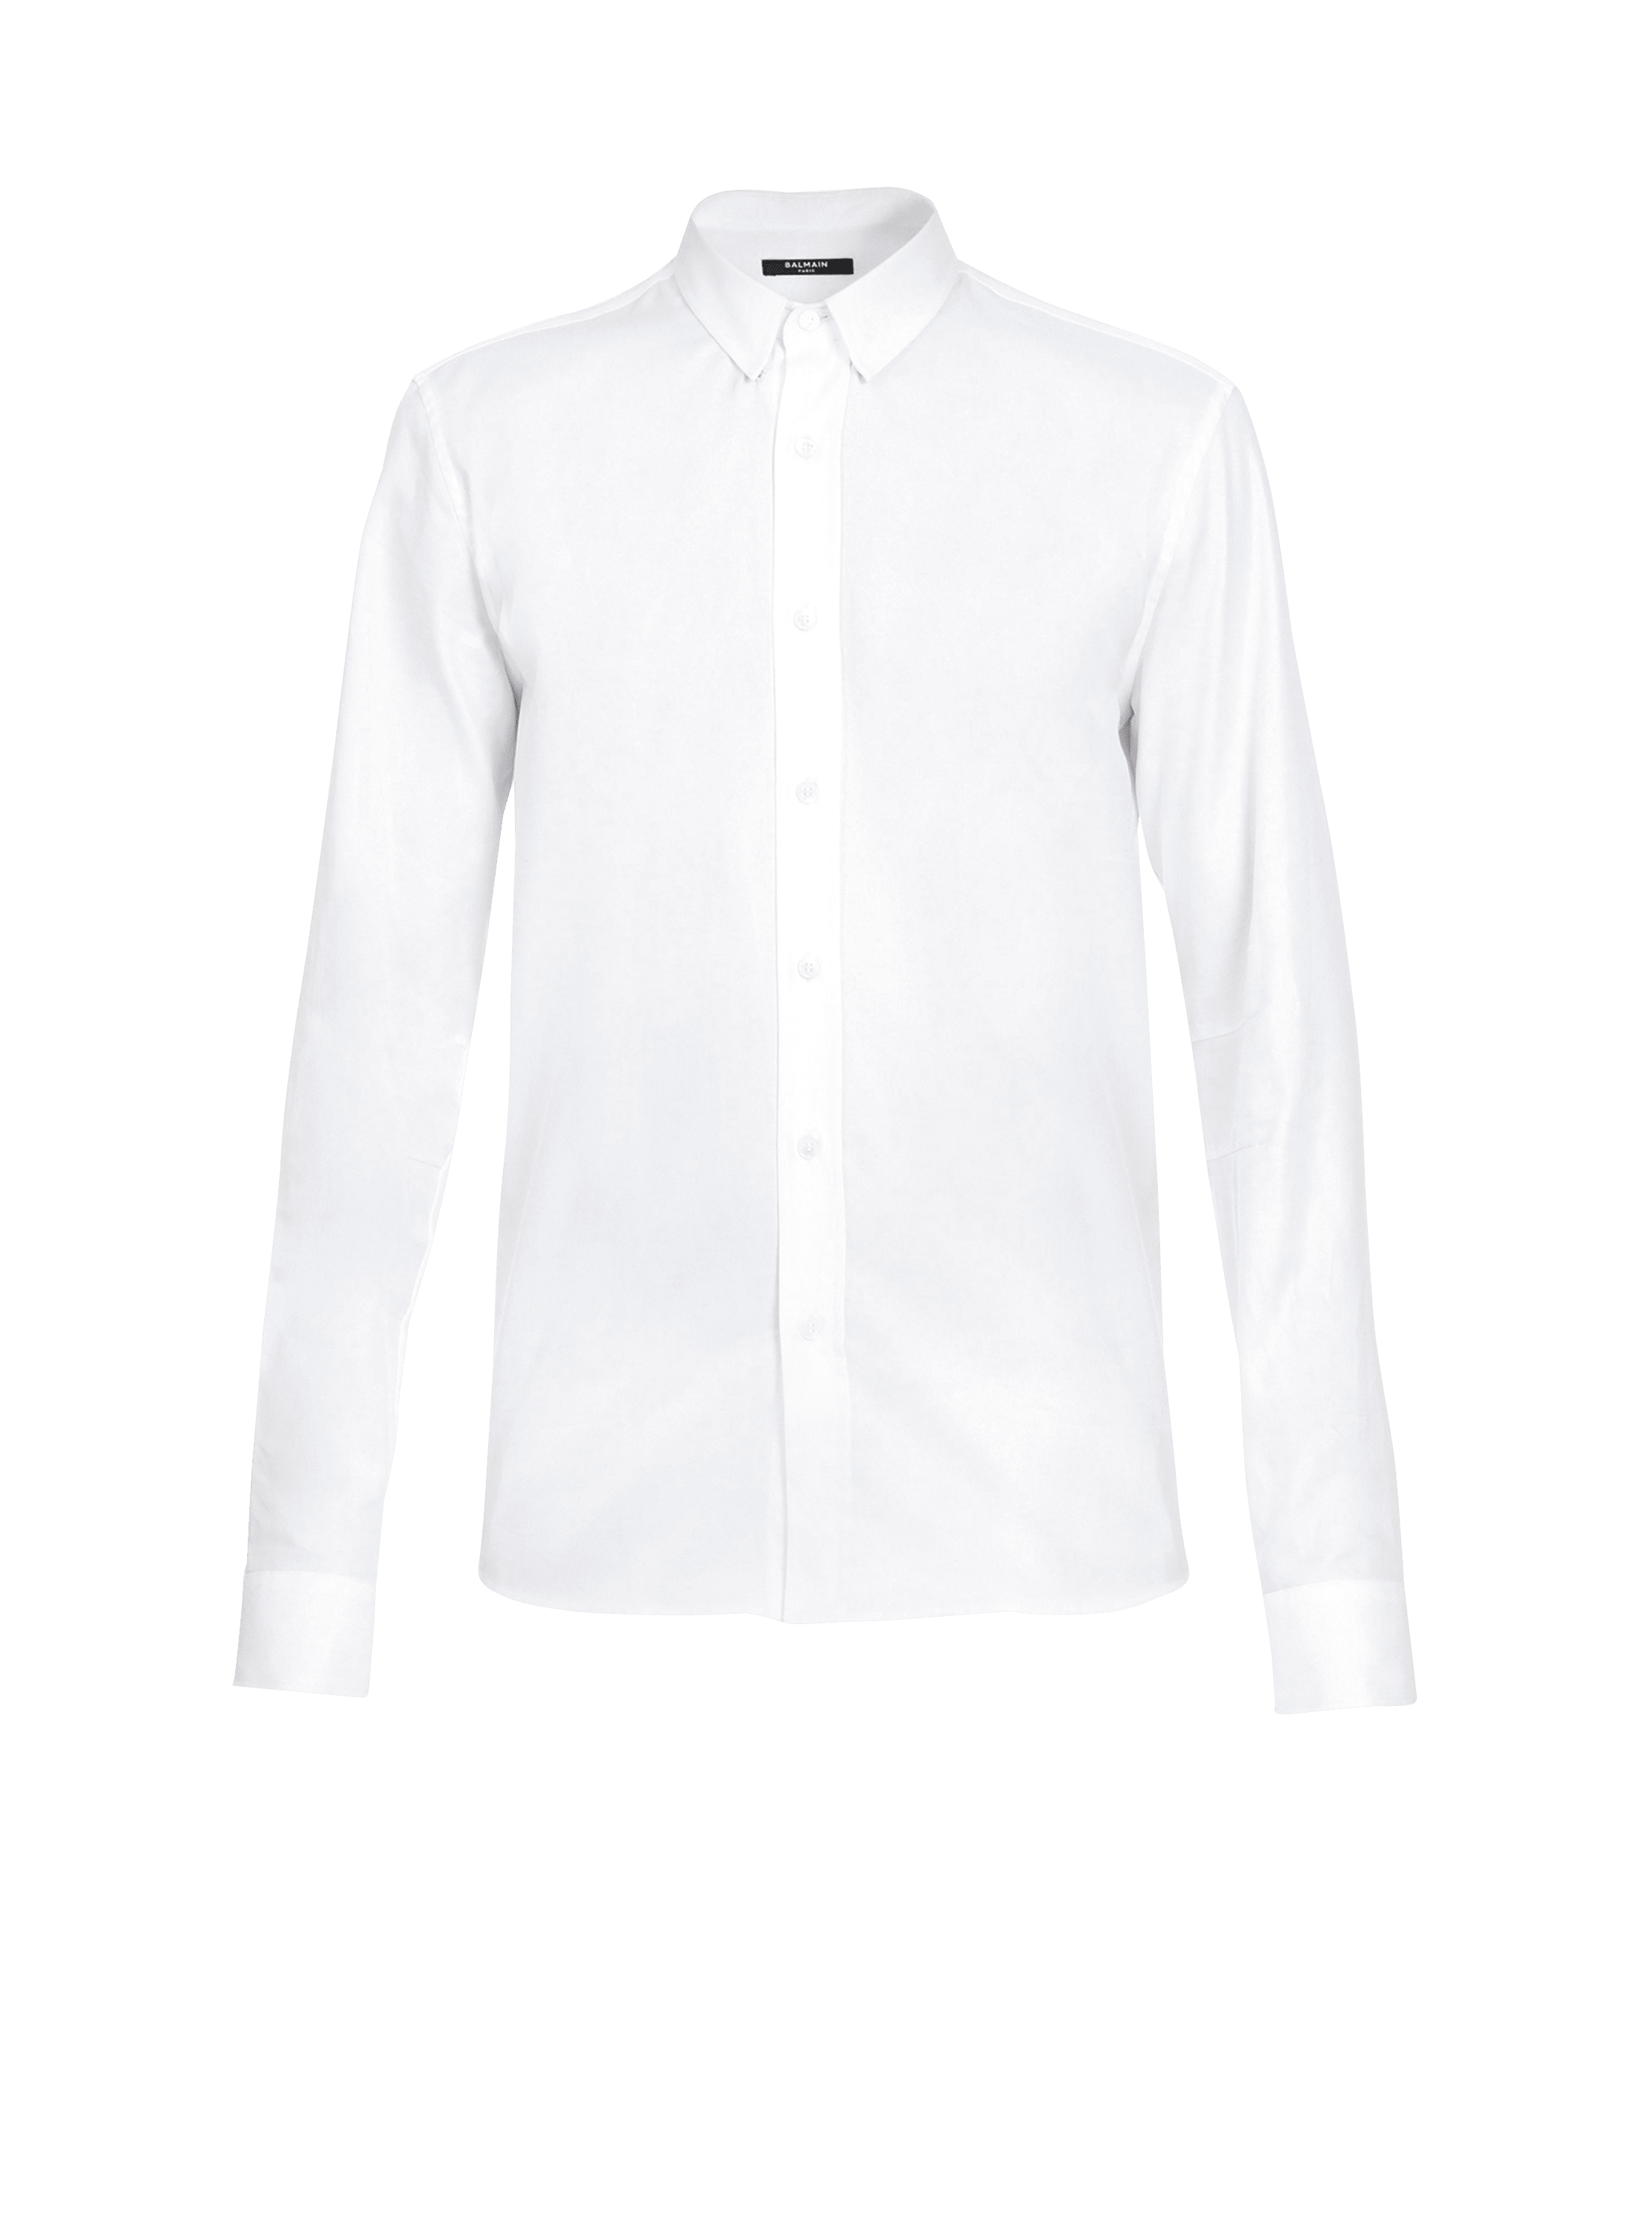 Camicia bianca aderente in cotone, bianco, hi-res